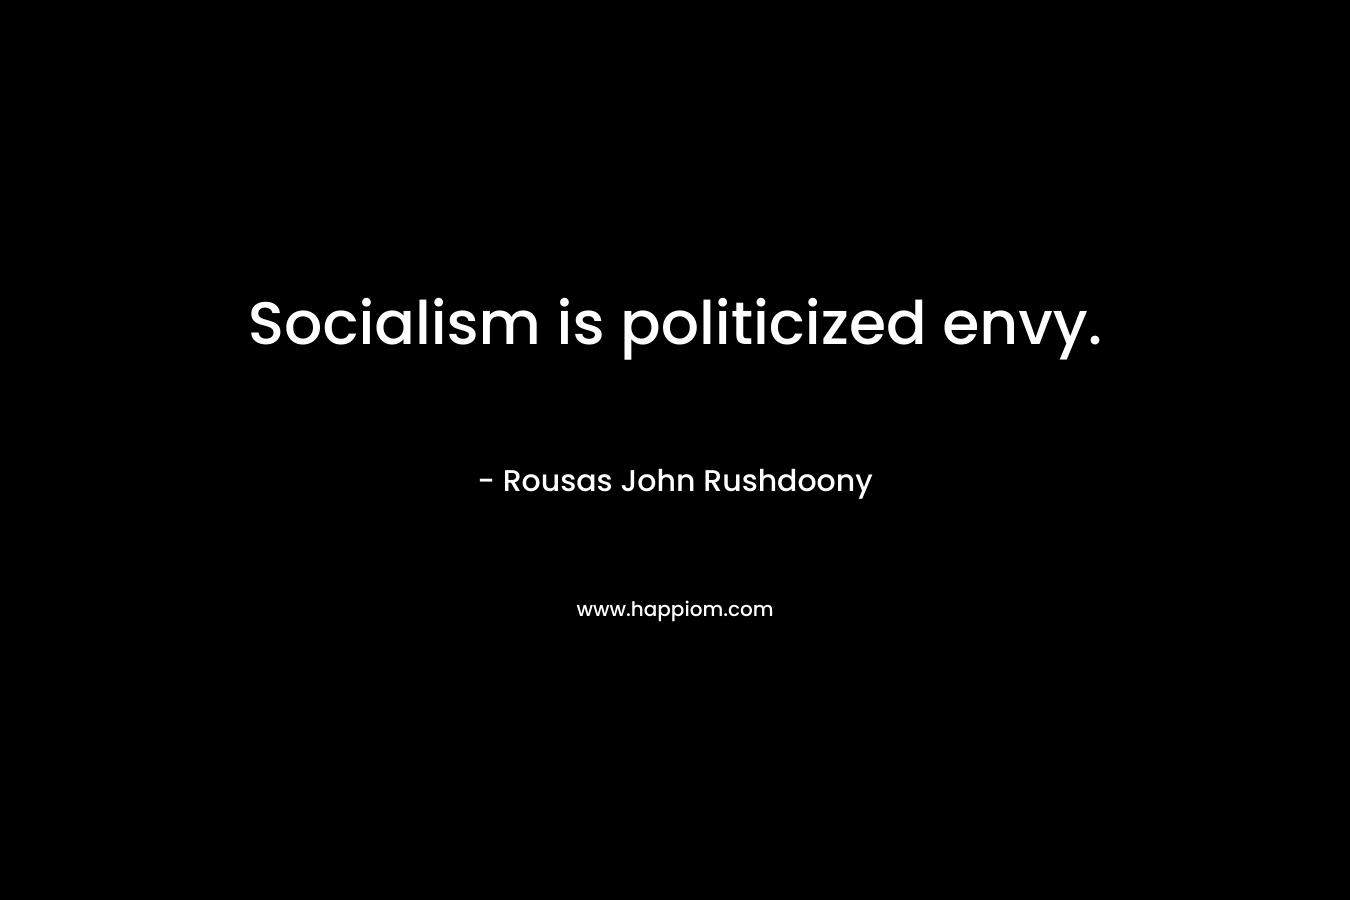 Socialism is politicized envy.